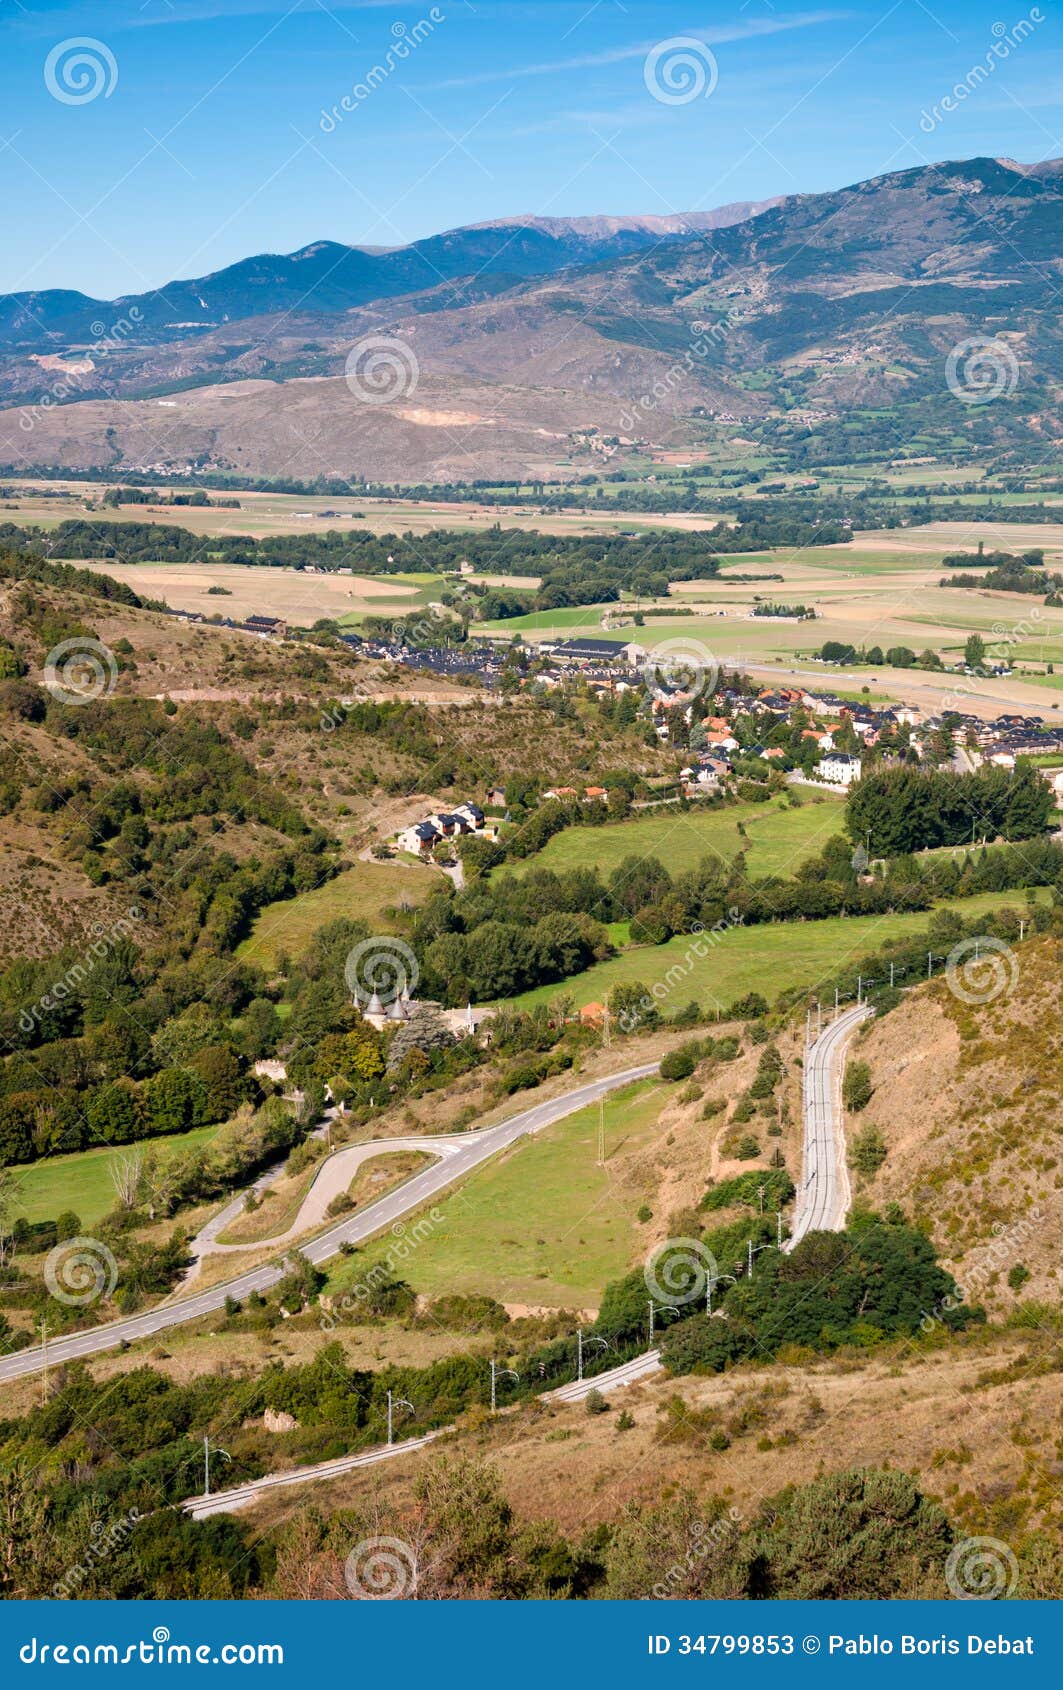 panoramic view of spanish pirineos and alp village